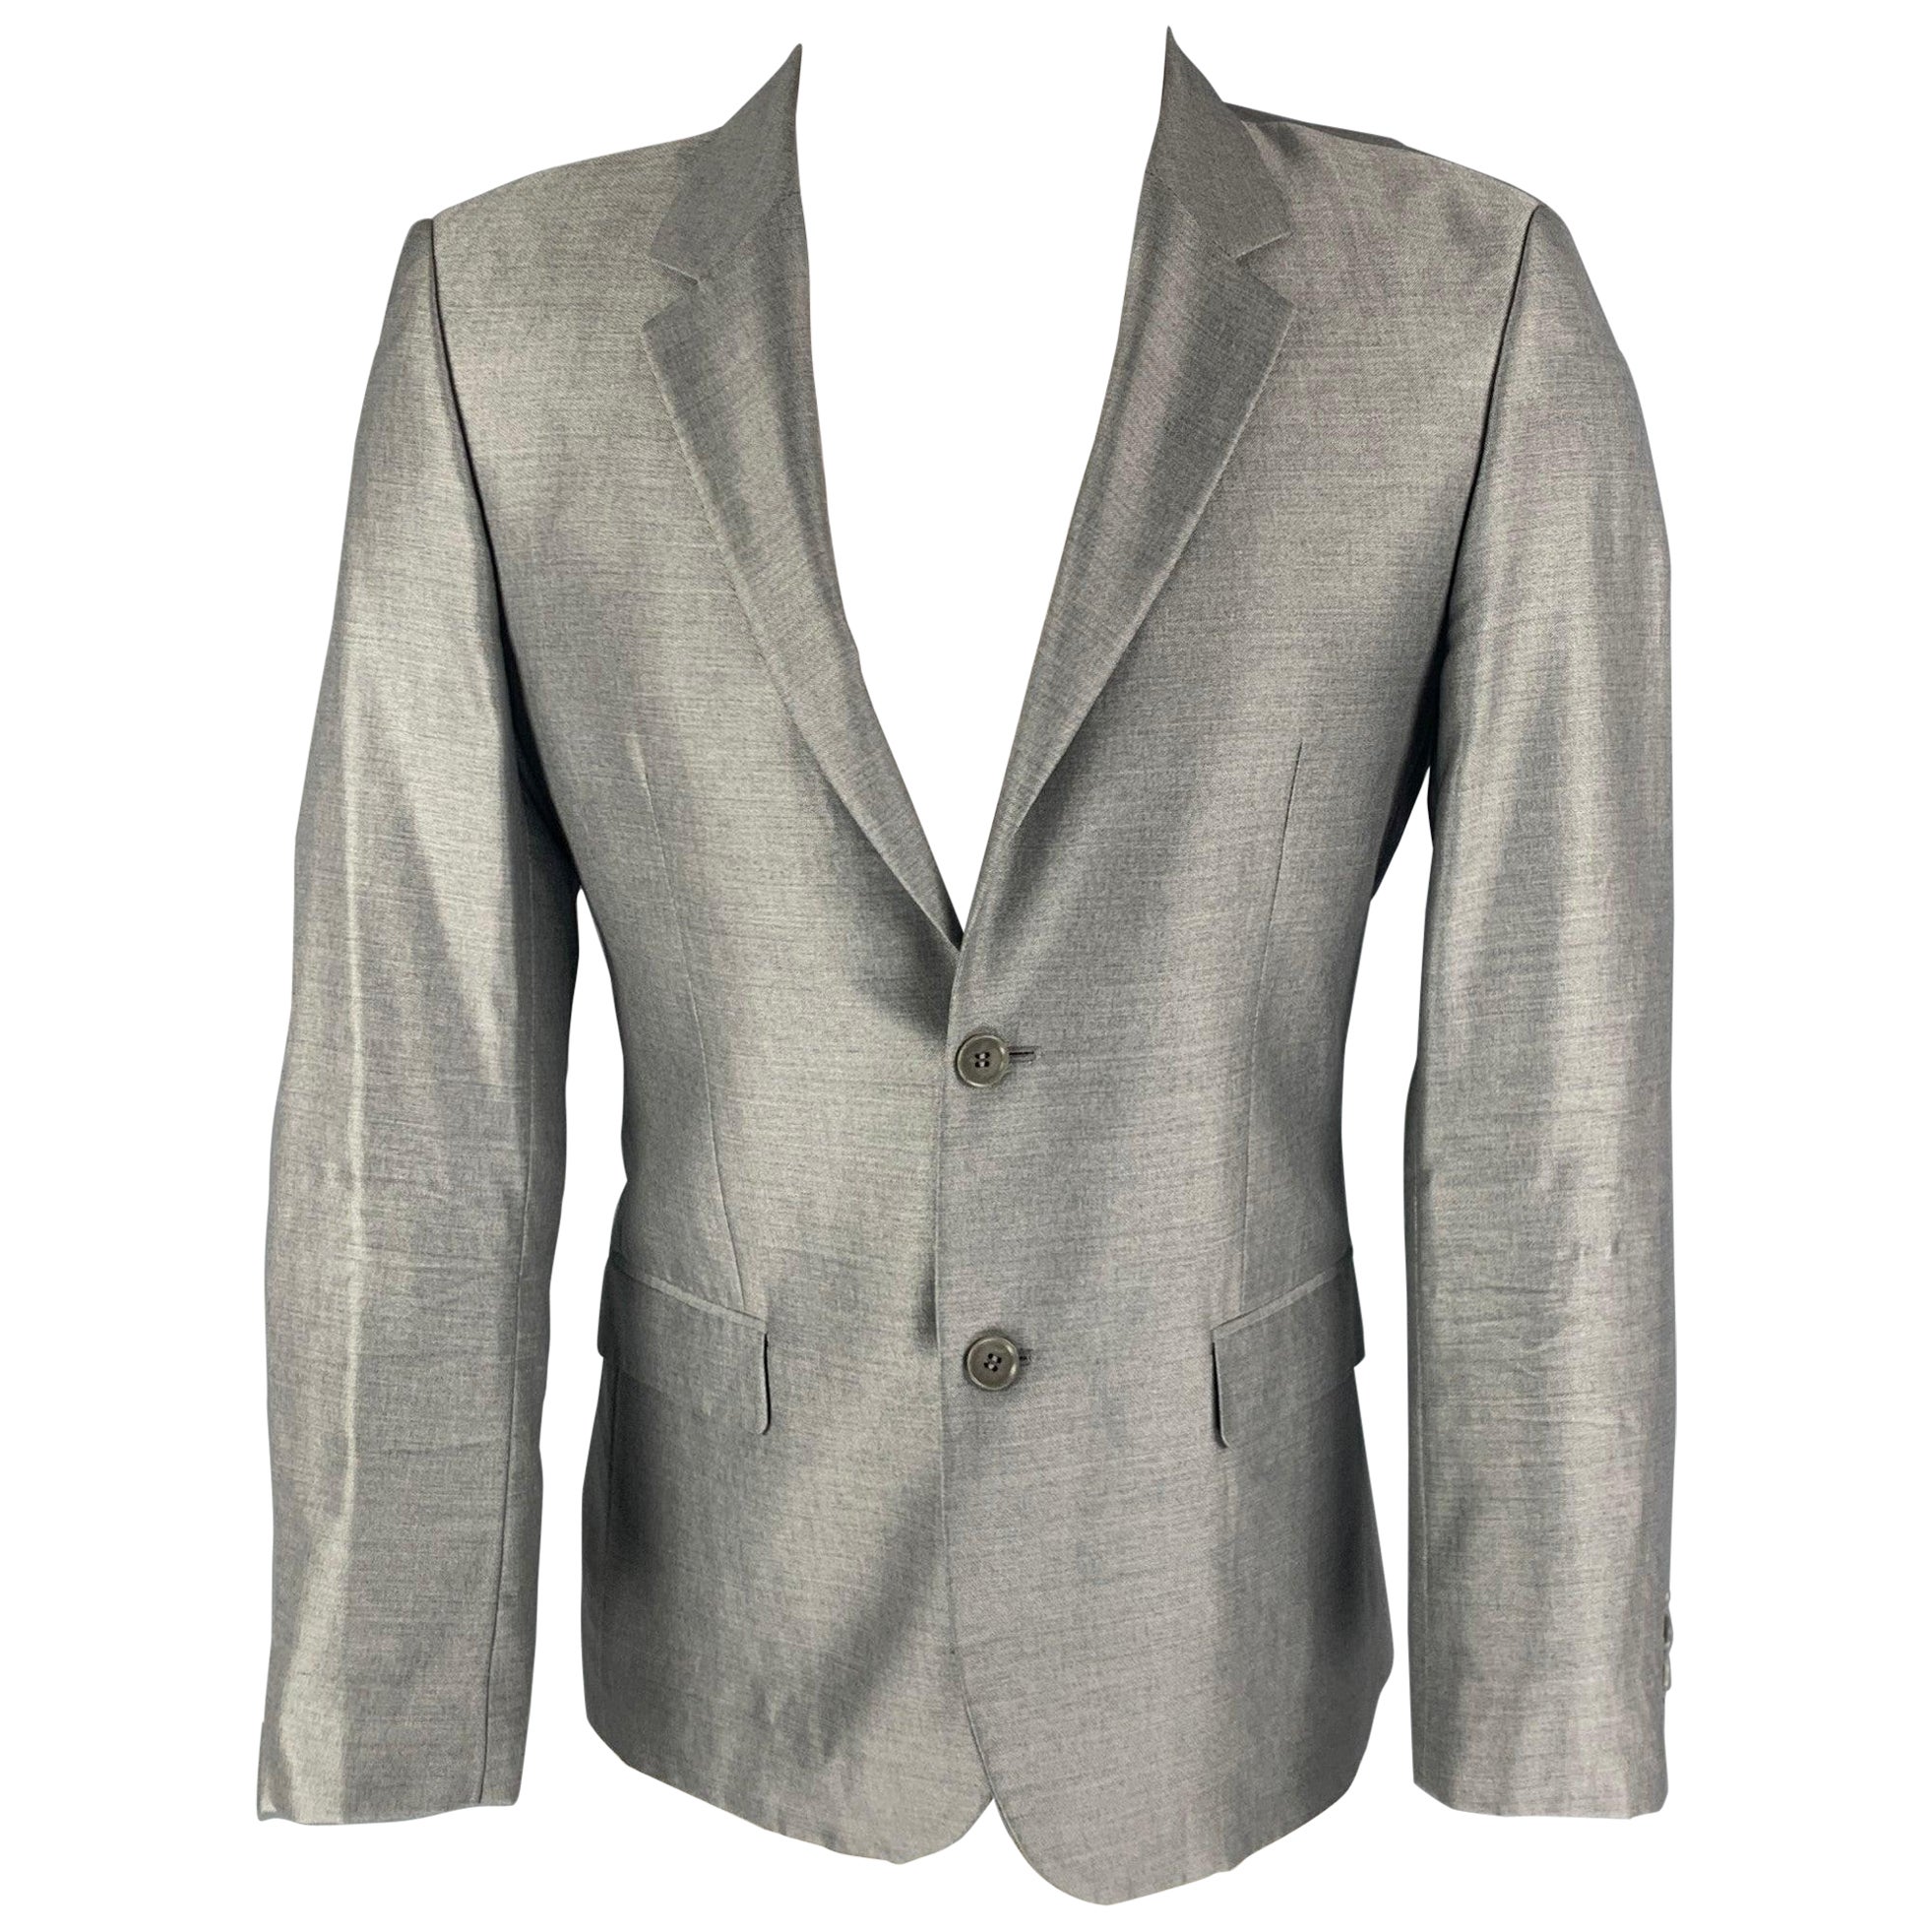 CALVIN KLEIN COLLECTION Size 36 Grey Notch Lapel Sport Coat For Sale